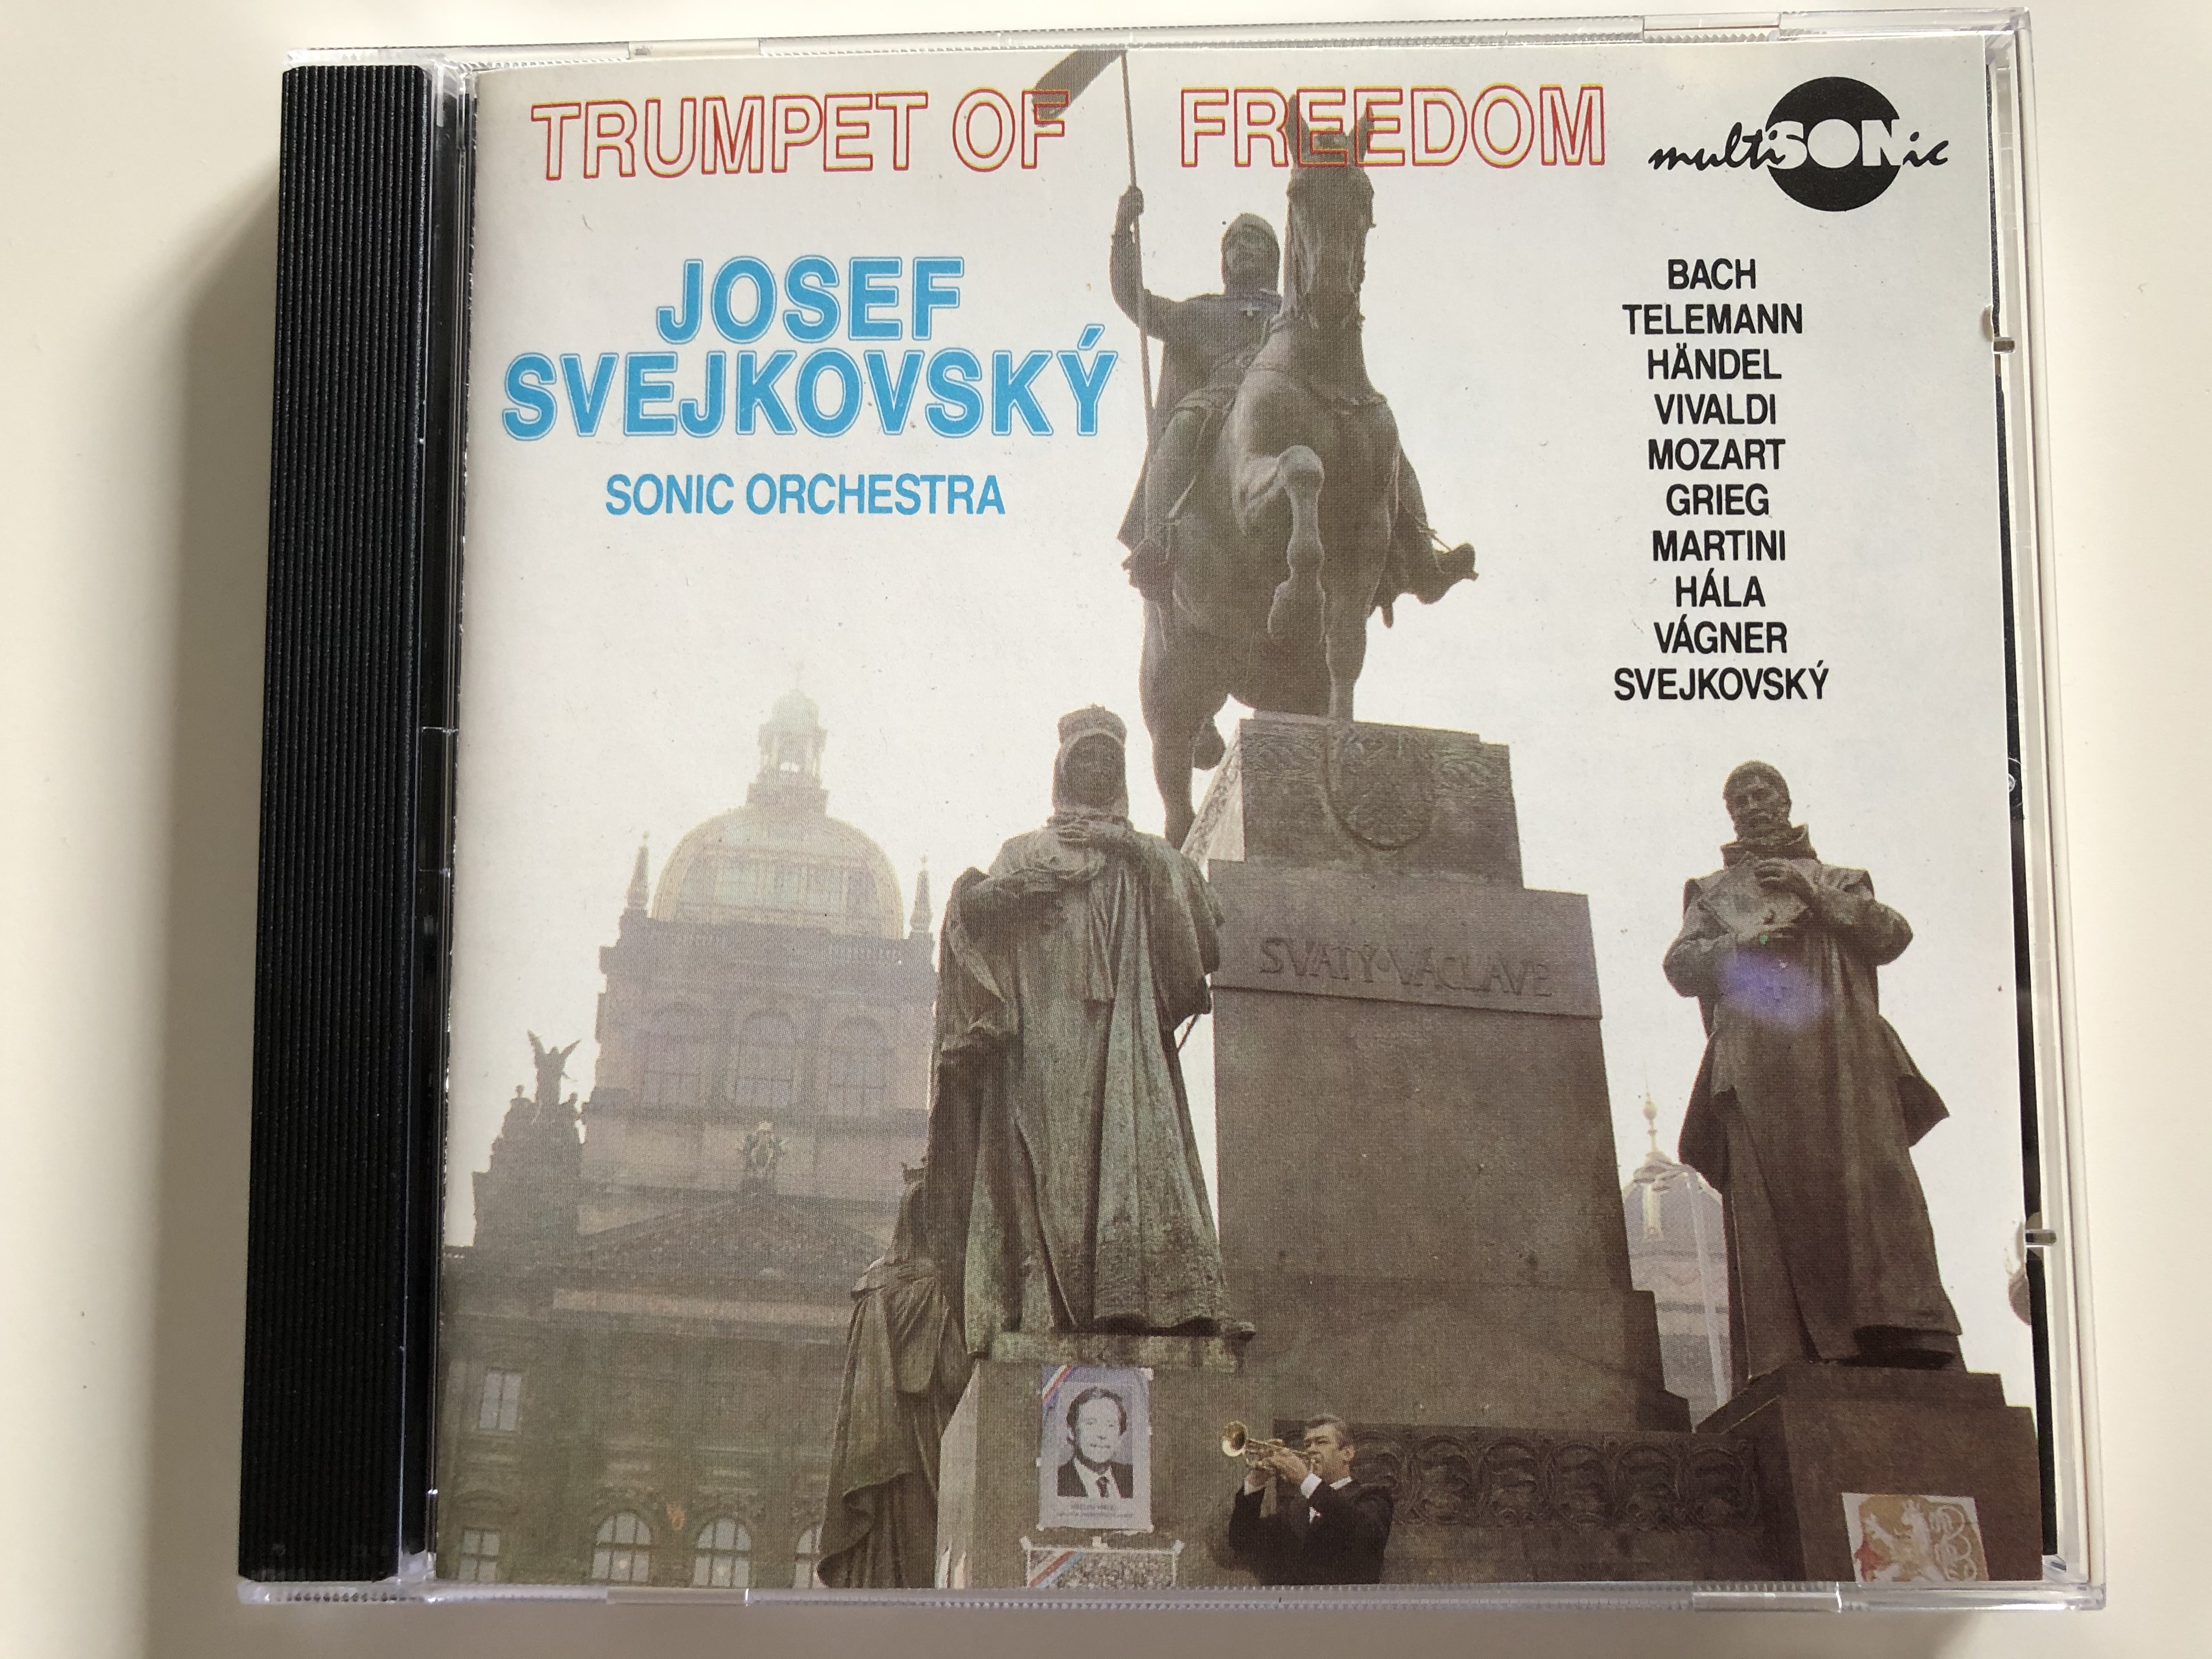 trumpet-of-freedom-josef-svejkovsk-sonic-orchestra-bach-telemann-handel-vivaldi-mozart-grieg-martini-hala-vagner-svejkovsky-multisonic-audio-cd-1990-stereo-31-0006-2-131-1-.jpg